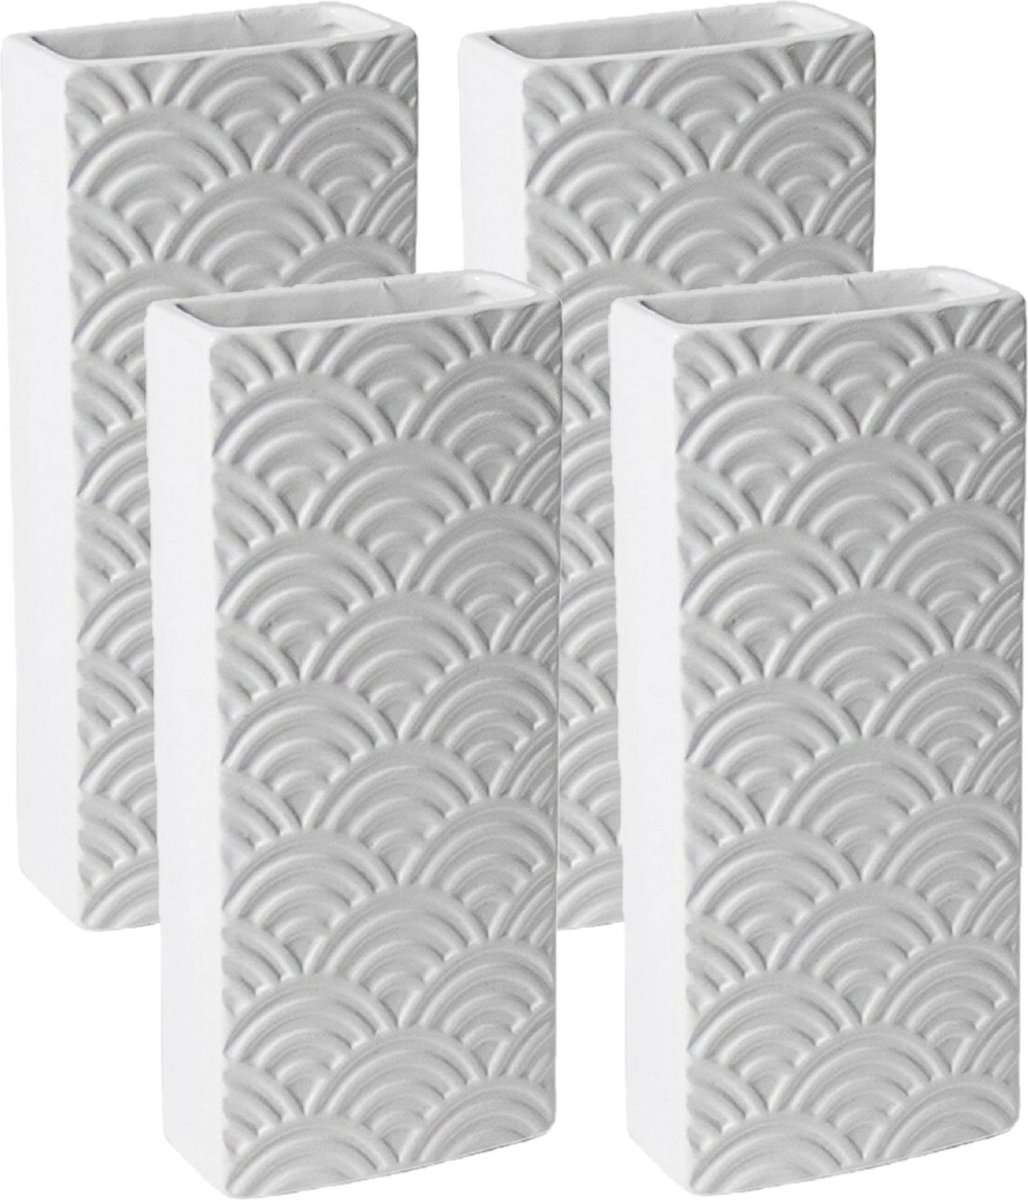 Luchtbevochtigers - 8 stuks - wit - aardewerk - 7,5 x 17,5 cm